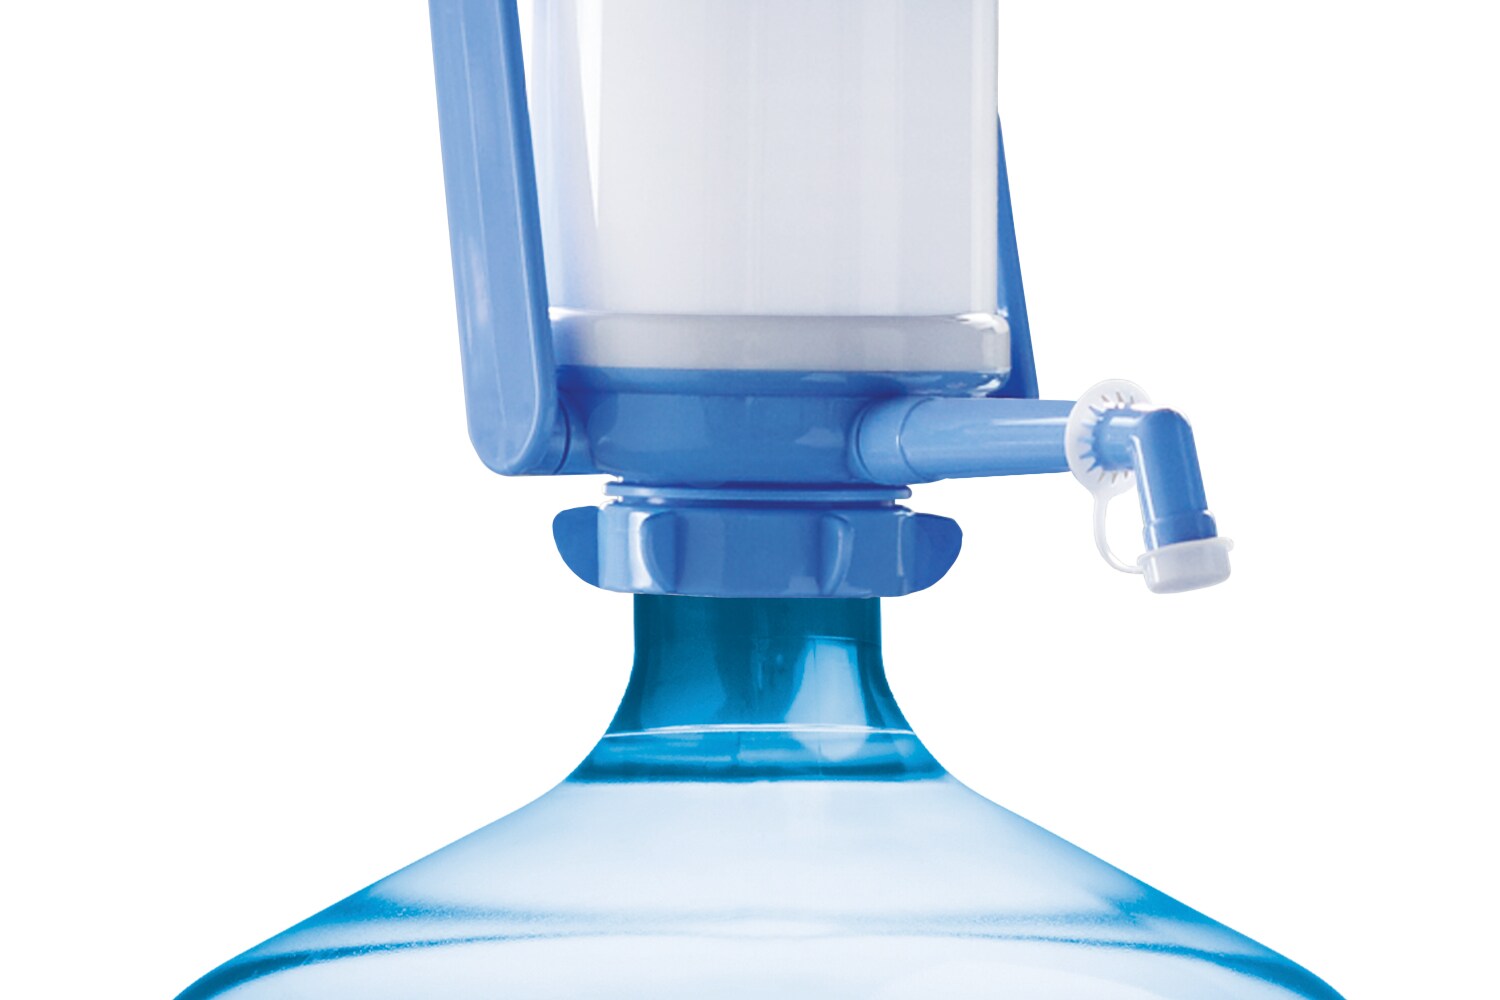 Primo Water Manual Pump - Baby Blue, 1 - Kroger